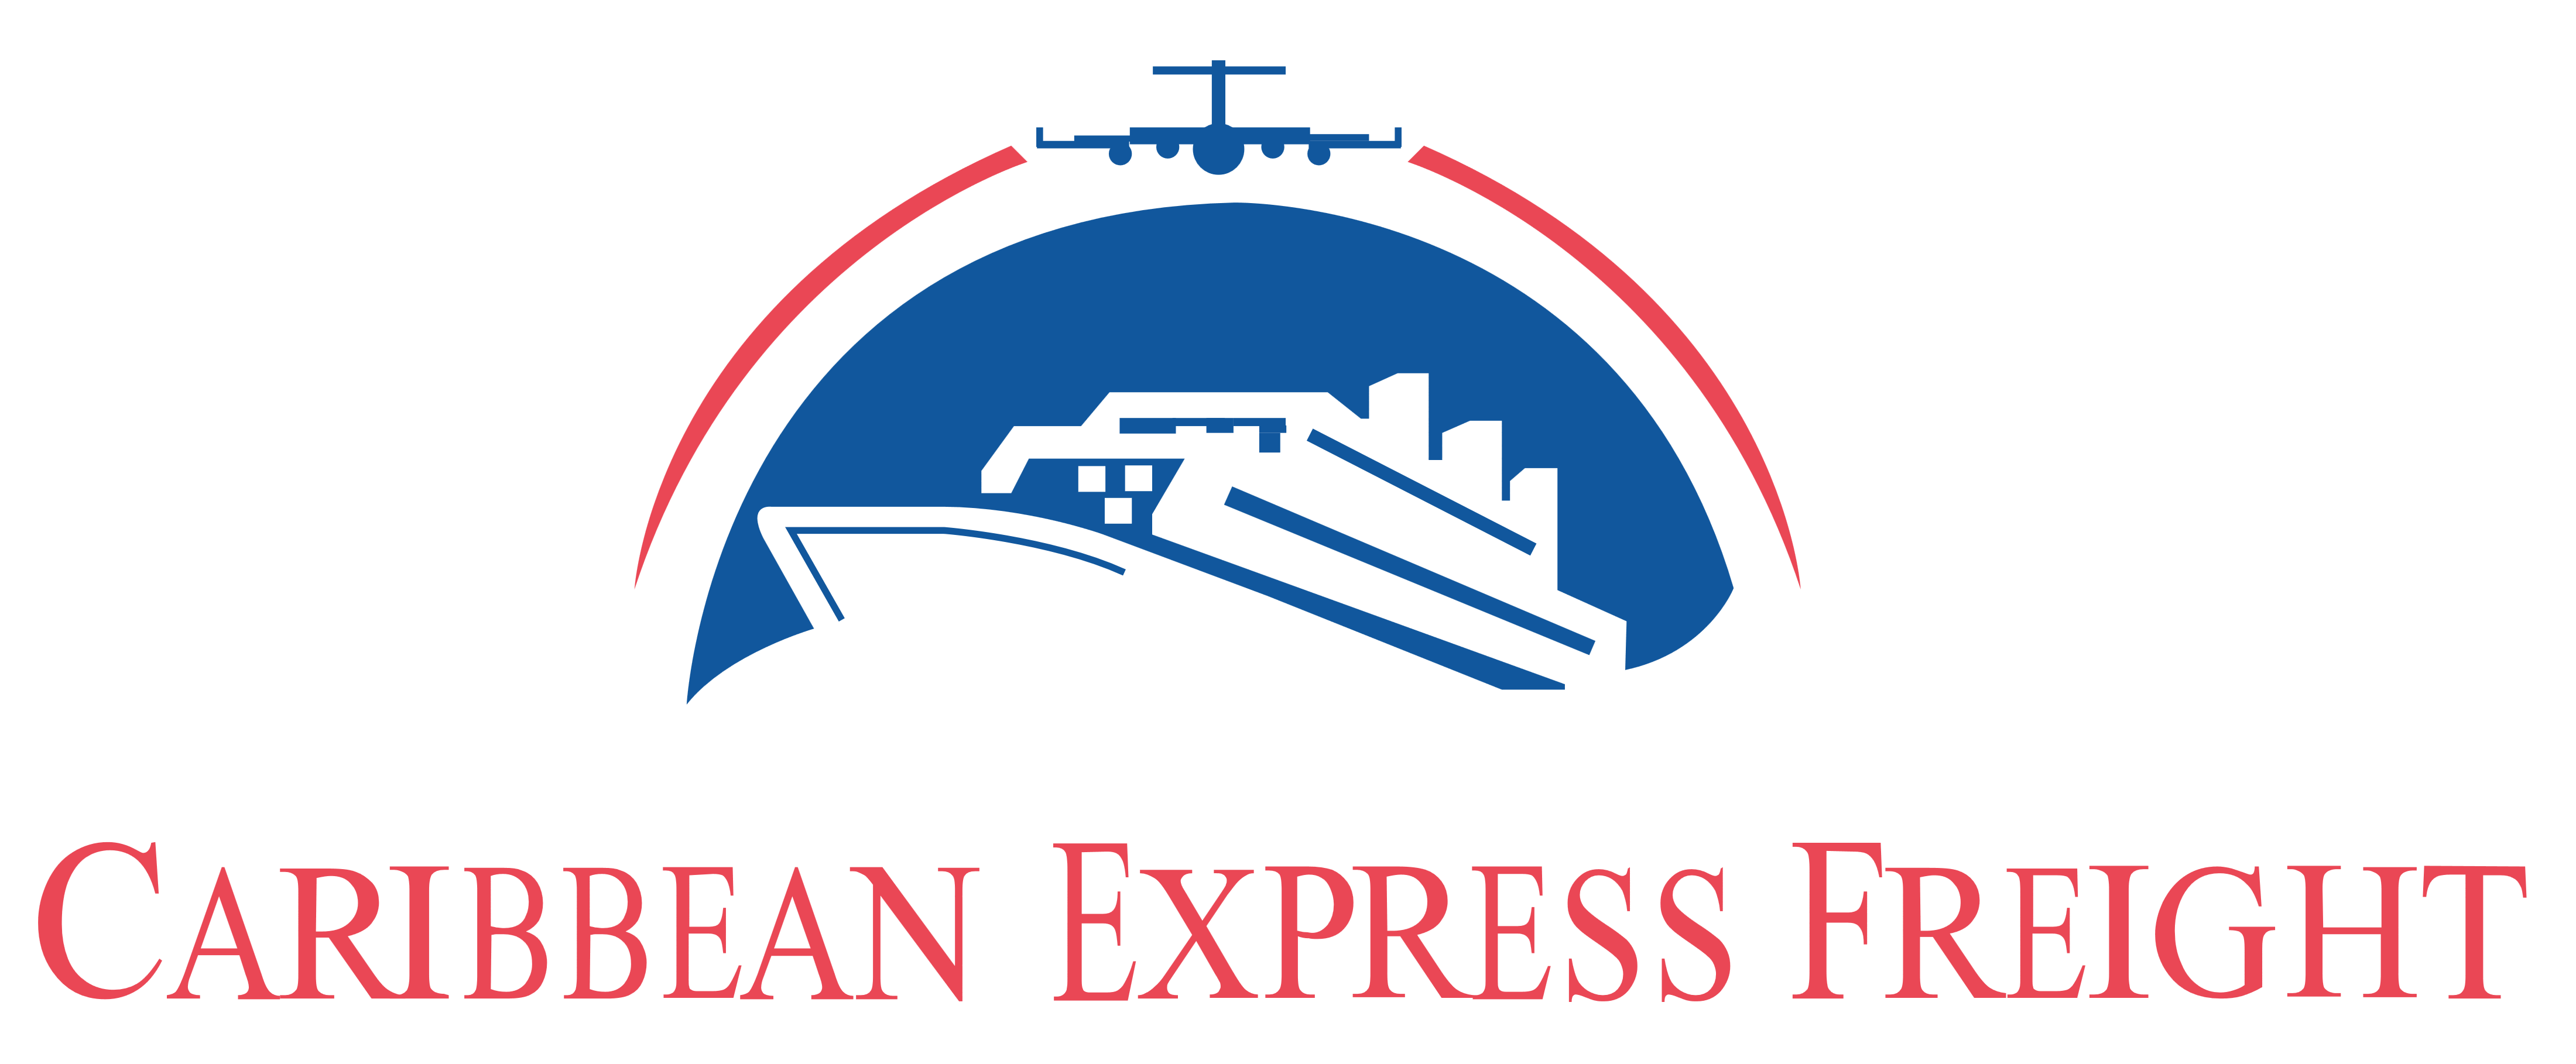 Freight Logo - Caribbean Express Freight – Logos Download